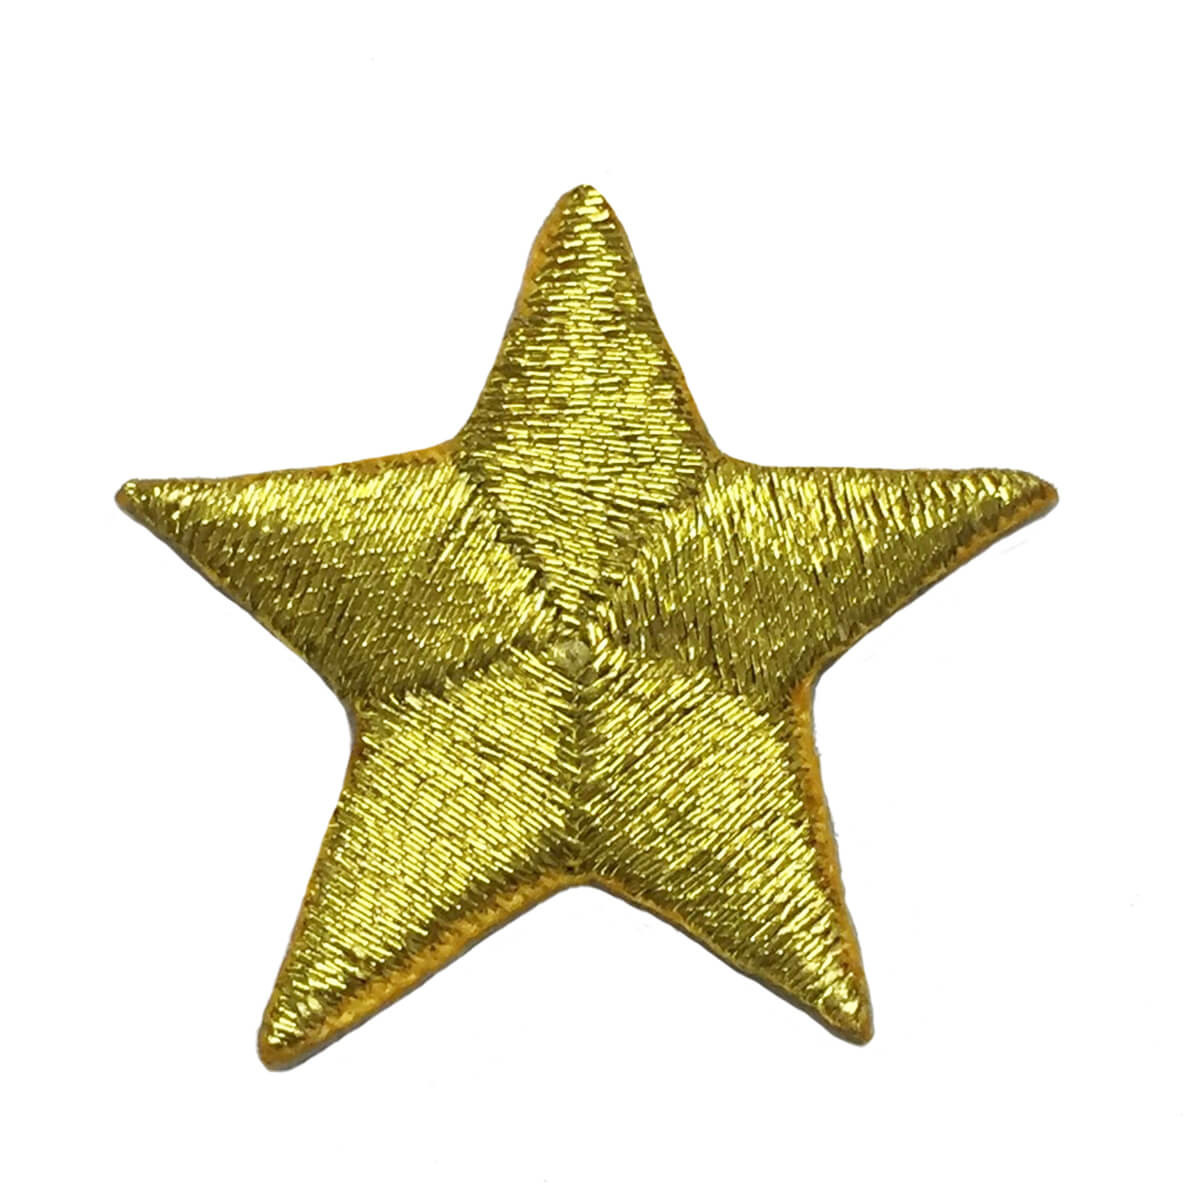 Star - Gold Honor Award